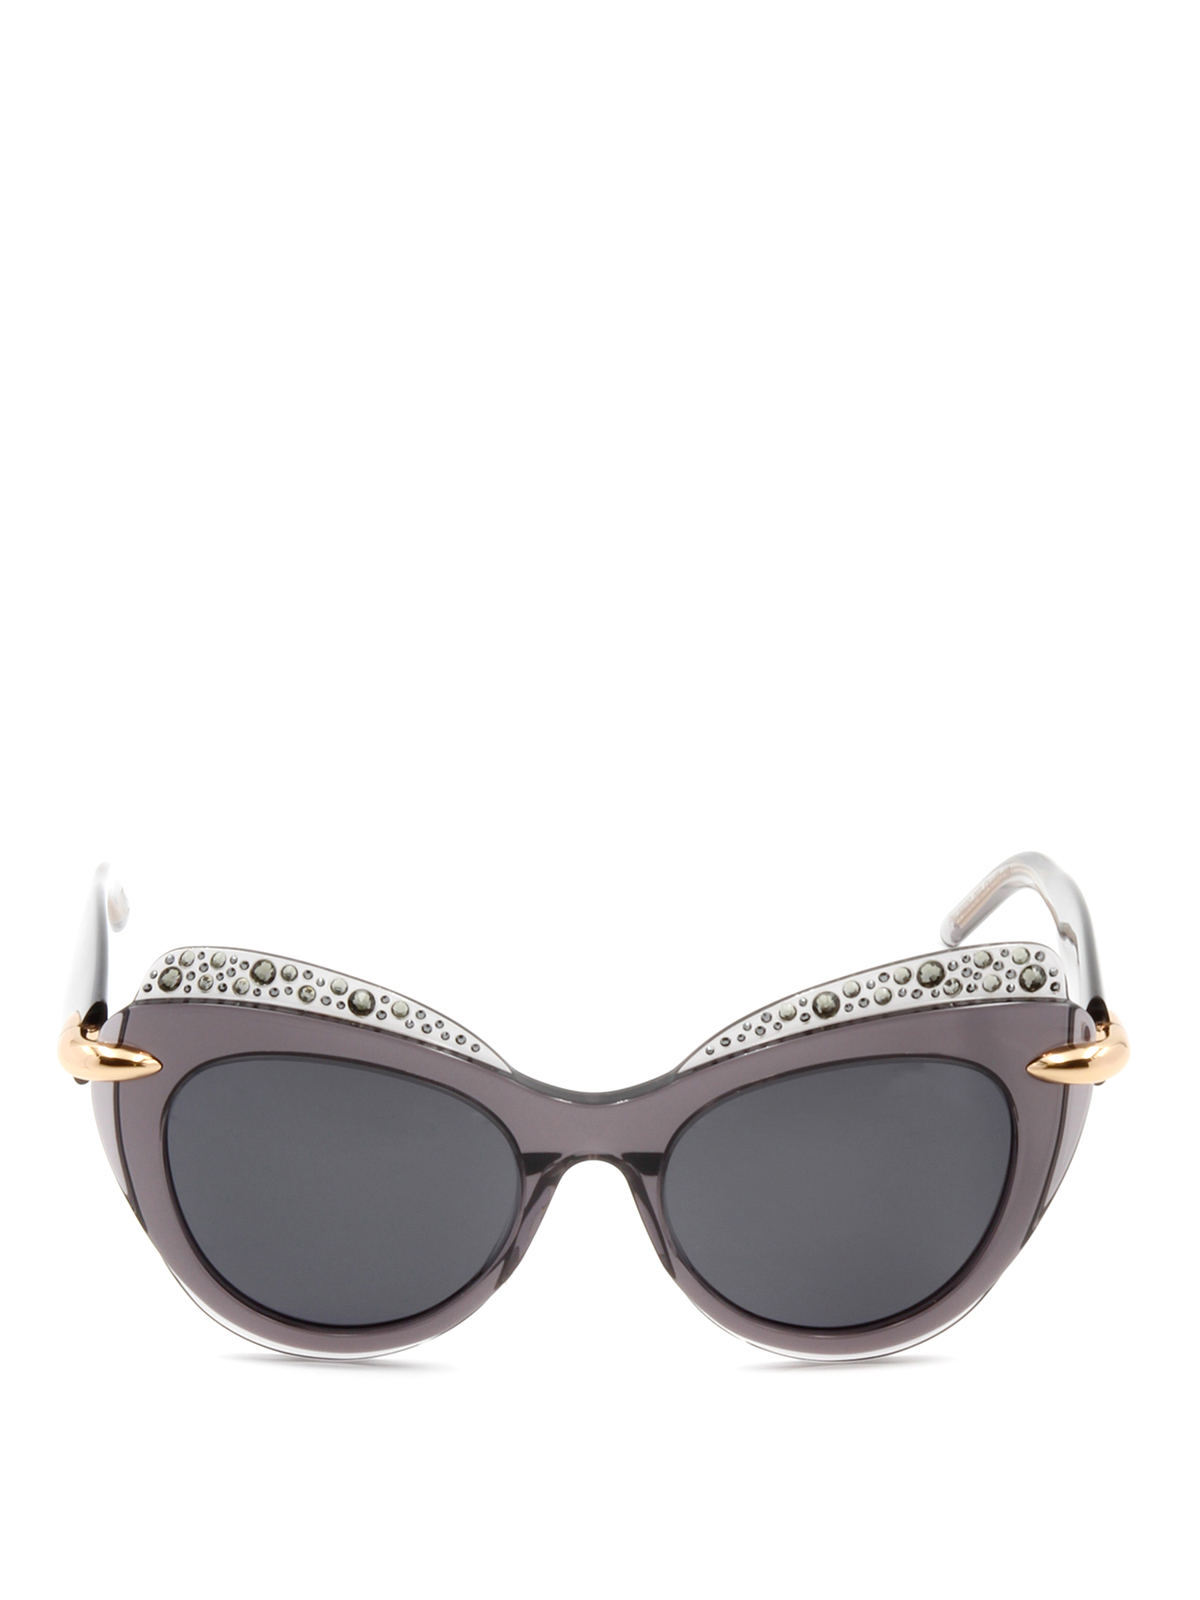 Sunglasses Pomellato - Exaggerated cat-eyes sunglasses - PM0002S7